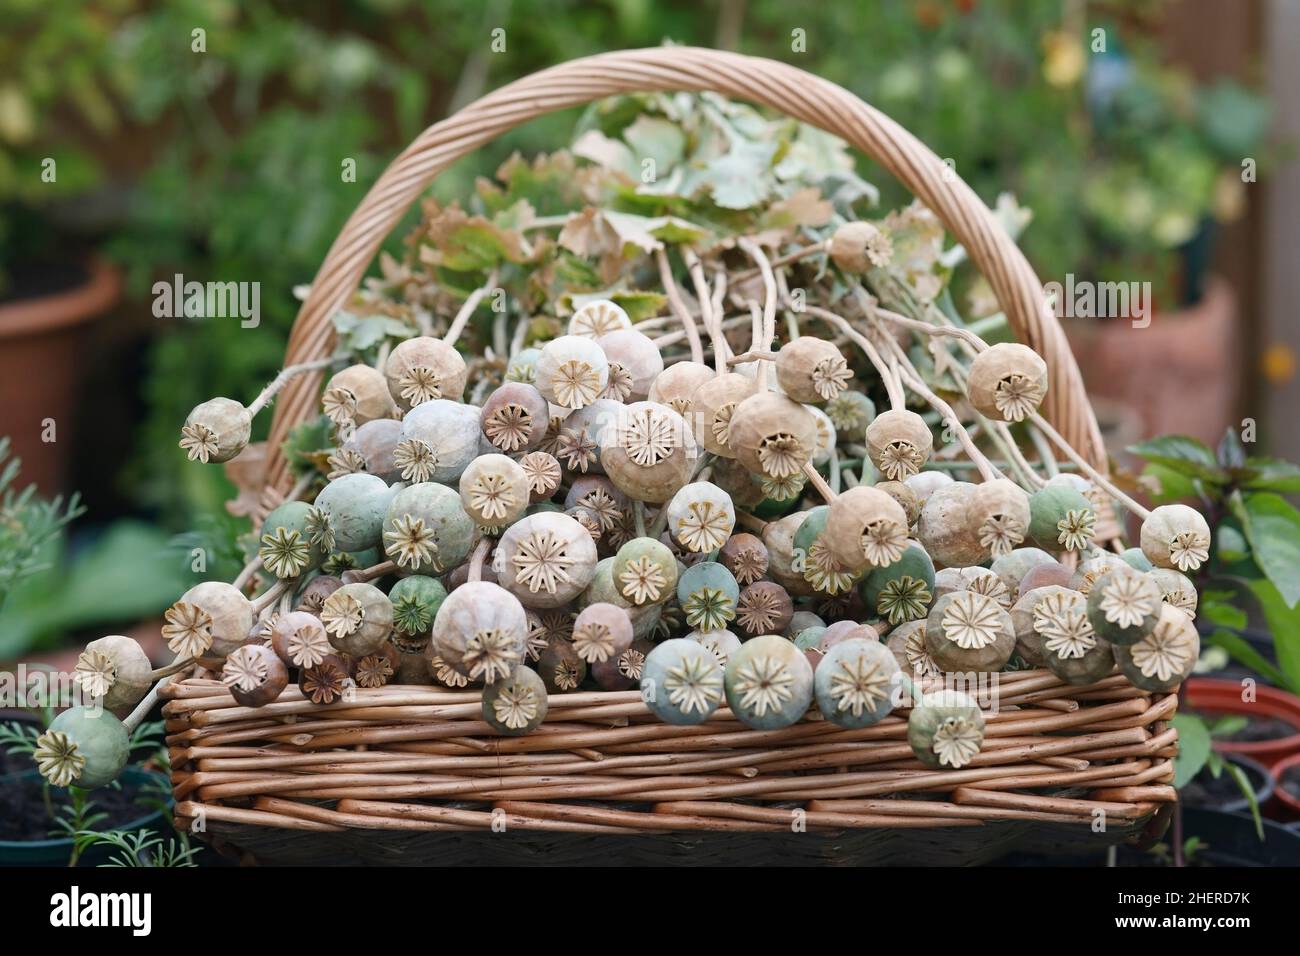 Papaver somniferum. Basket of Poppy seedheads. Stock Photo